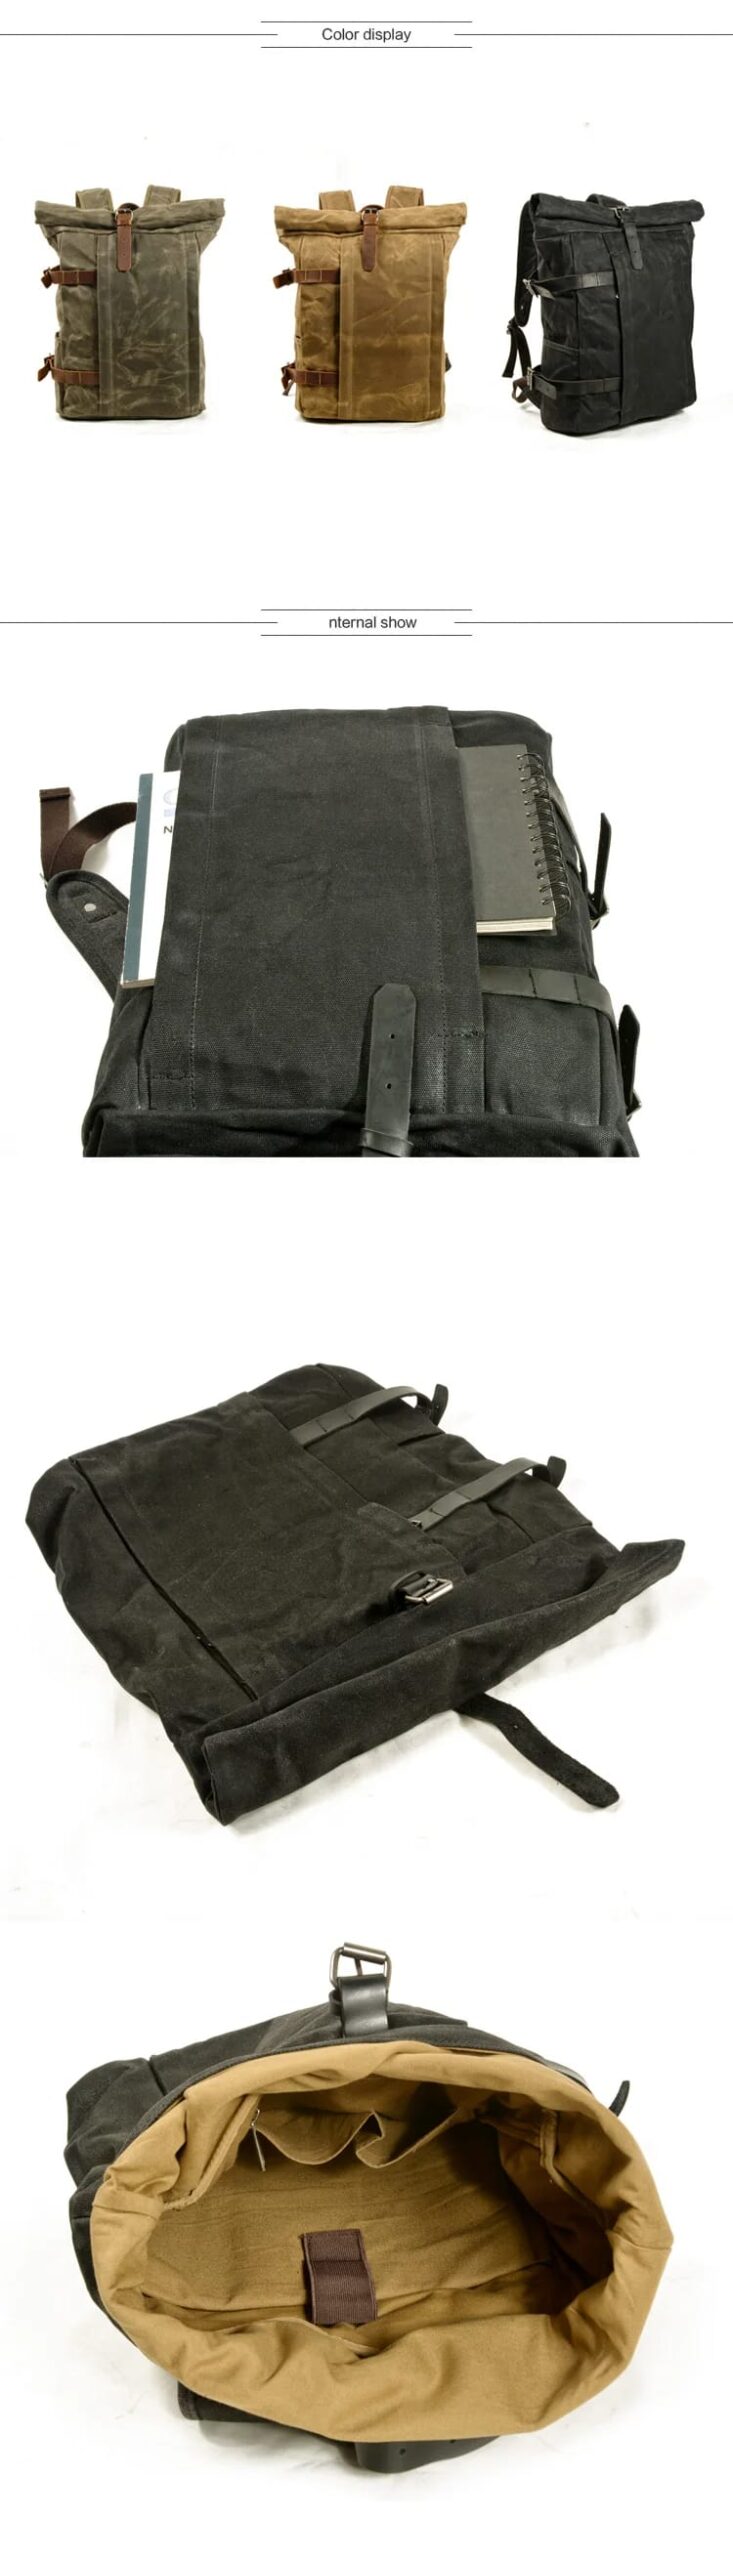 17-Inch Unisex Canvas Anti-Theft Artisan Retro Fashion Travel Backpack